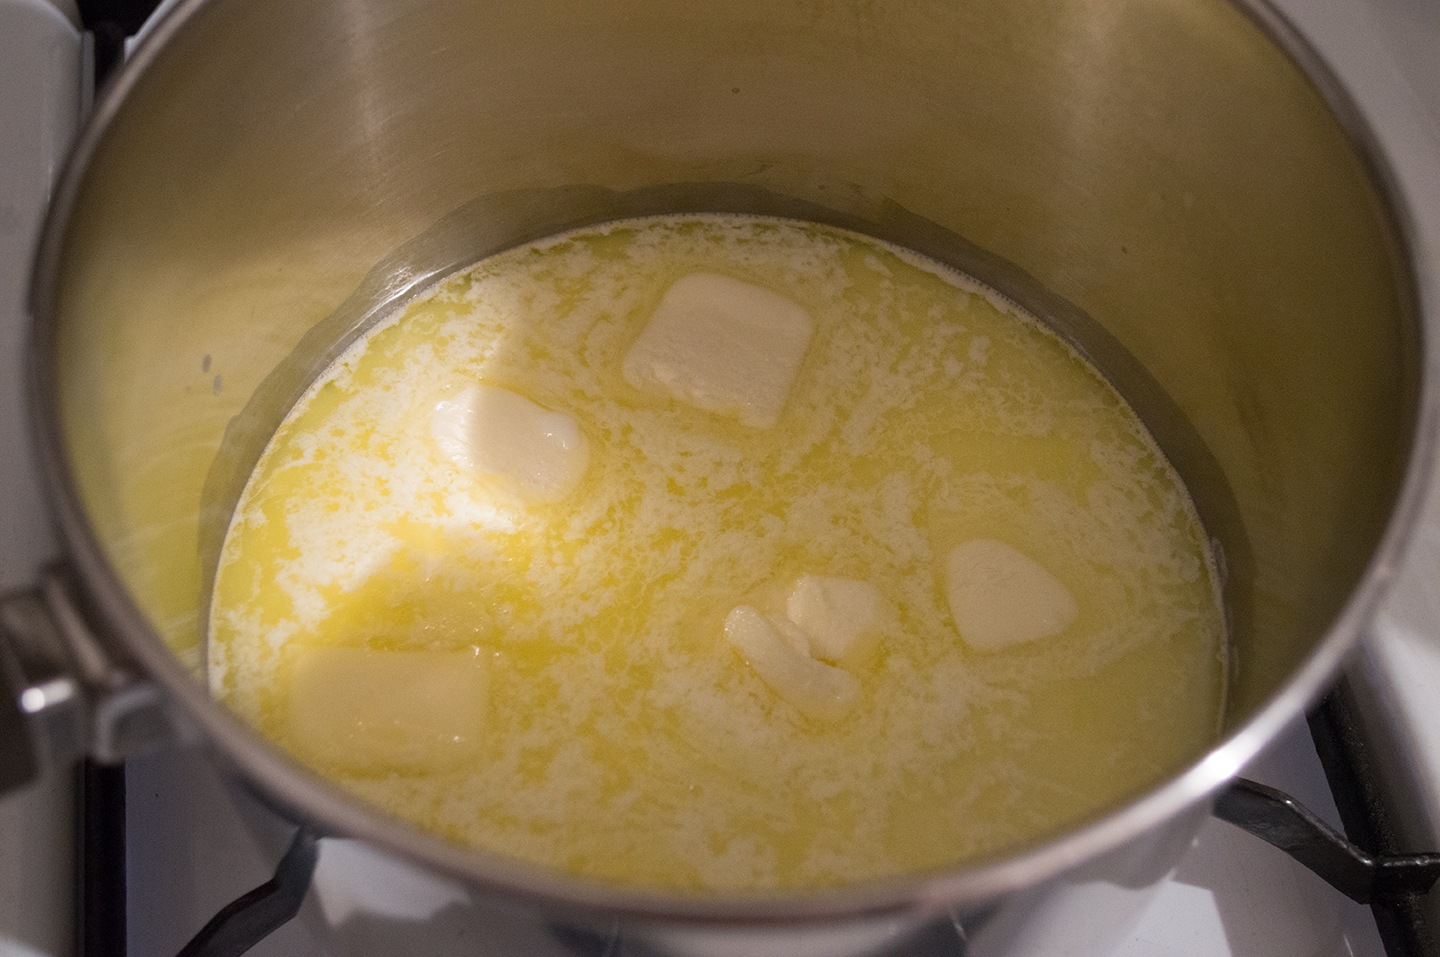 Pâte à Choux - Melting the Butter